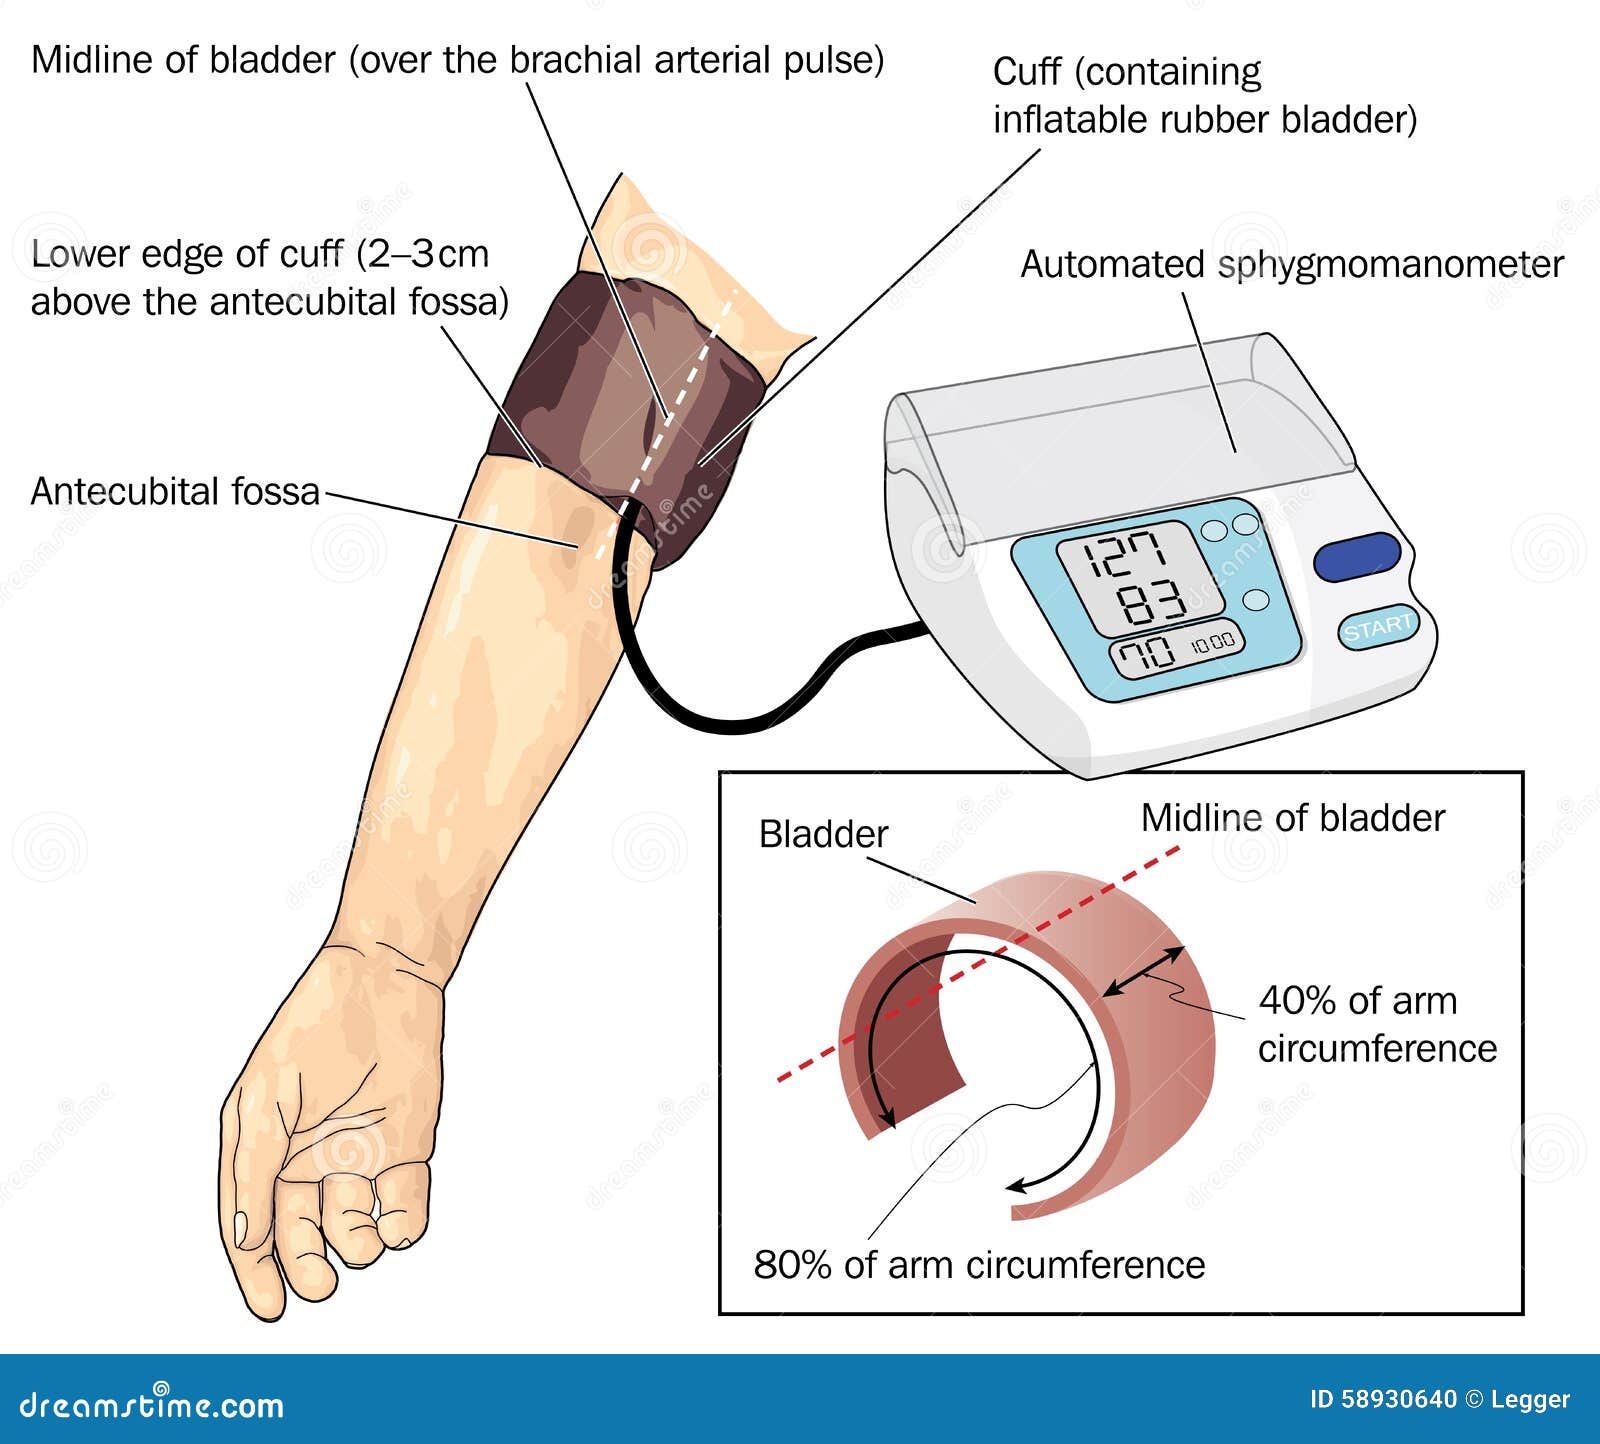 measurement of blood pressure